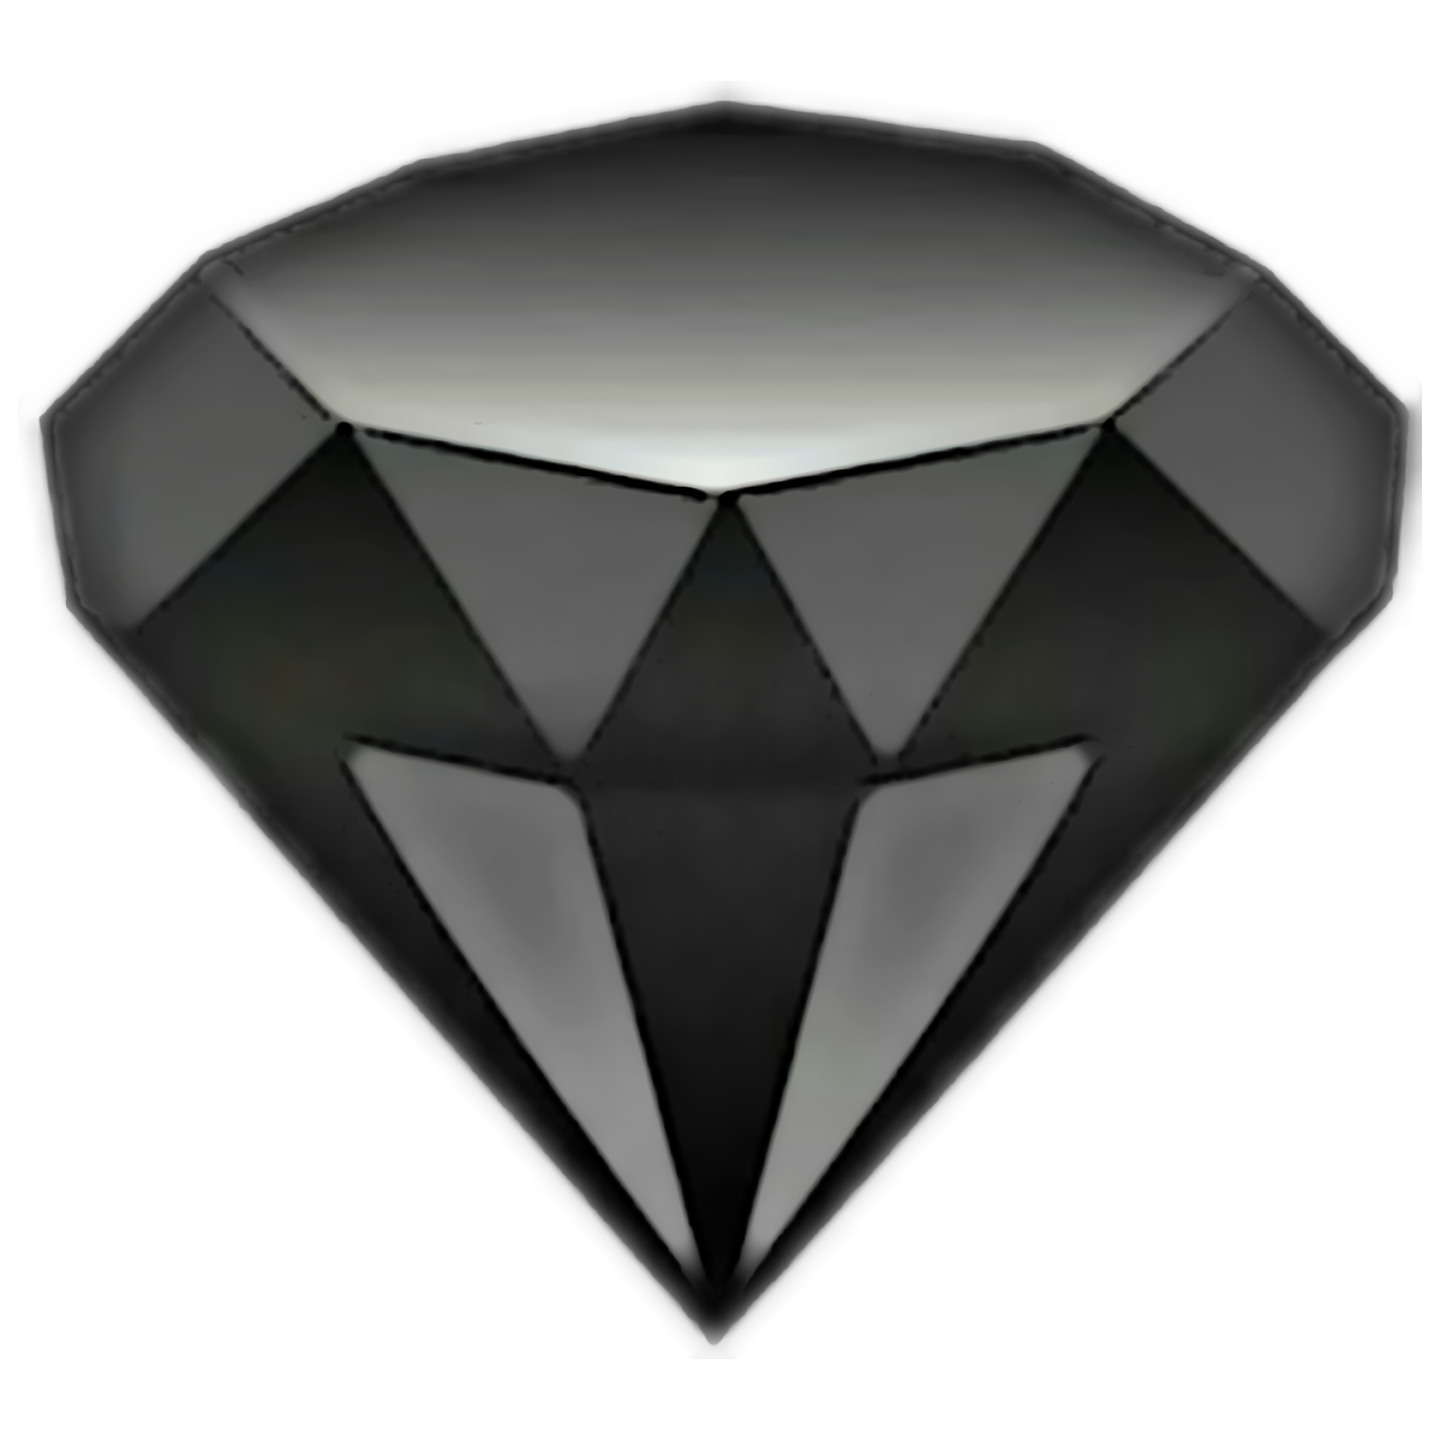 diamonds jewels gems stones crystals sticker by @cynthompson.